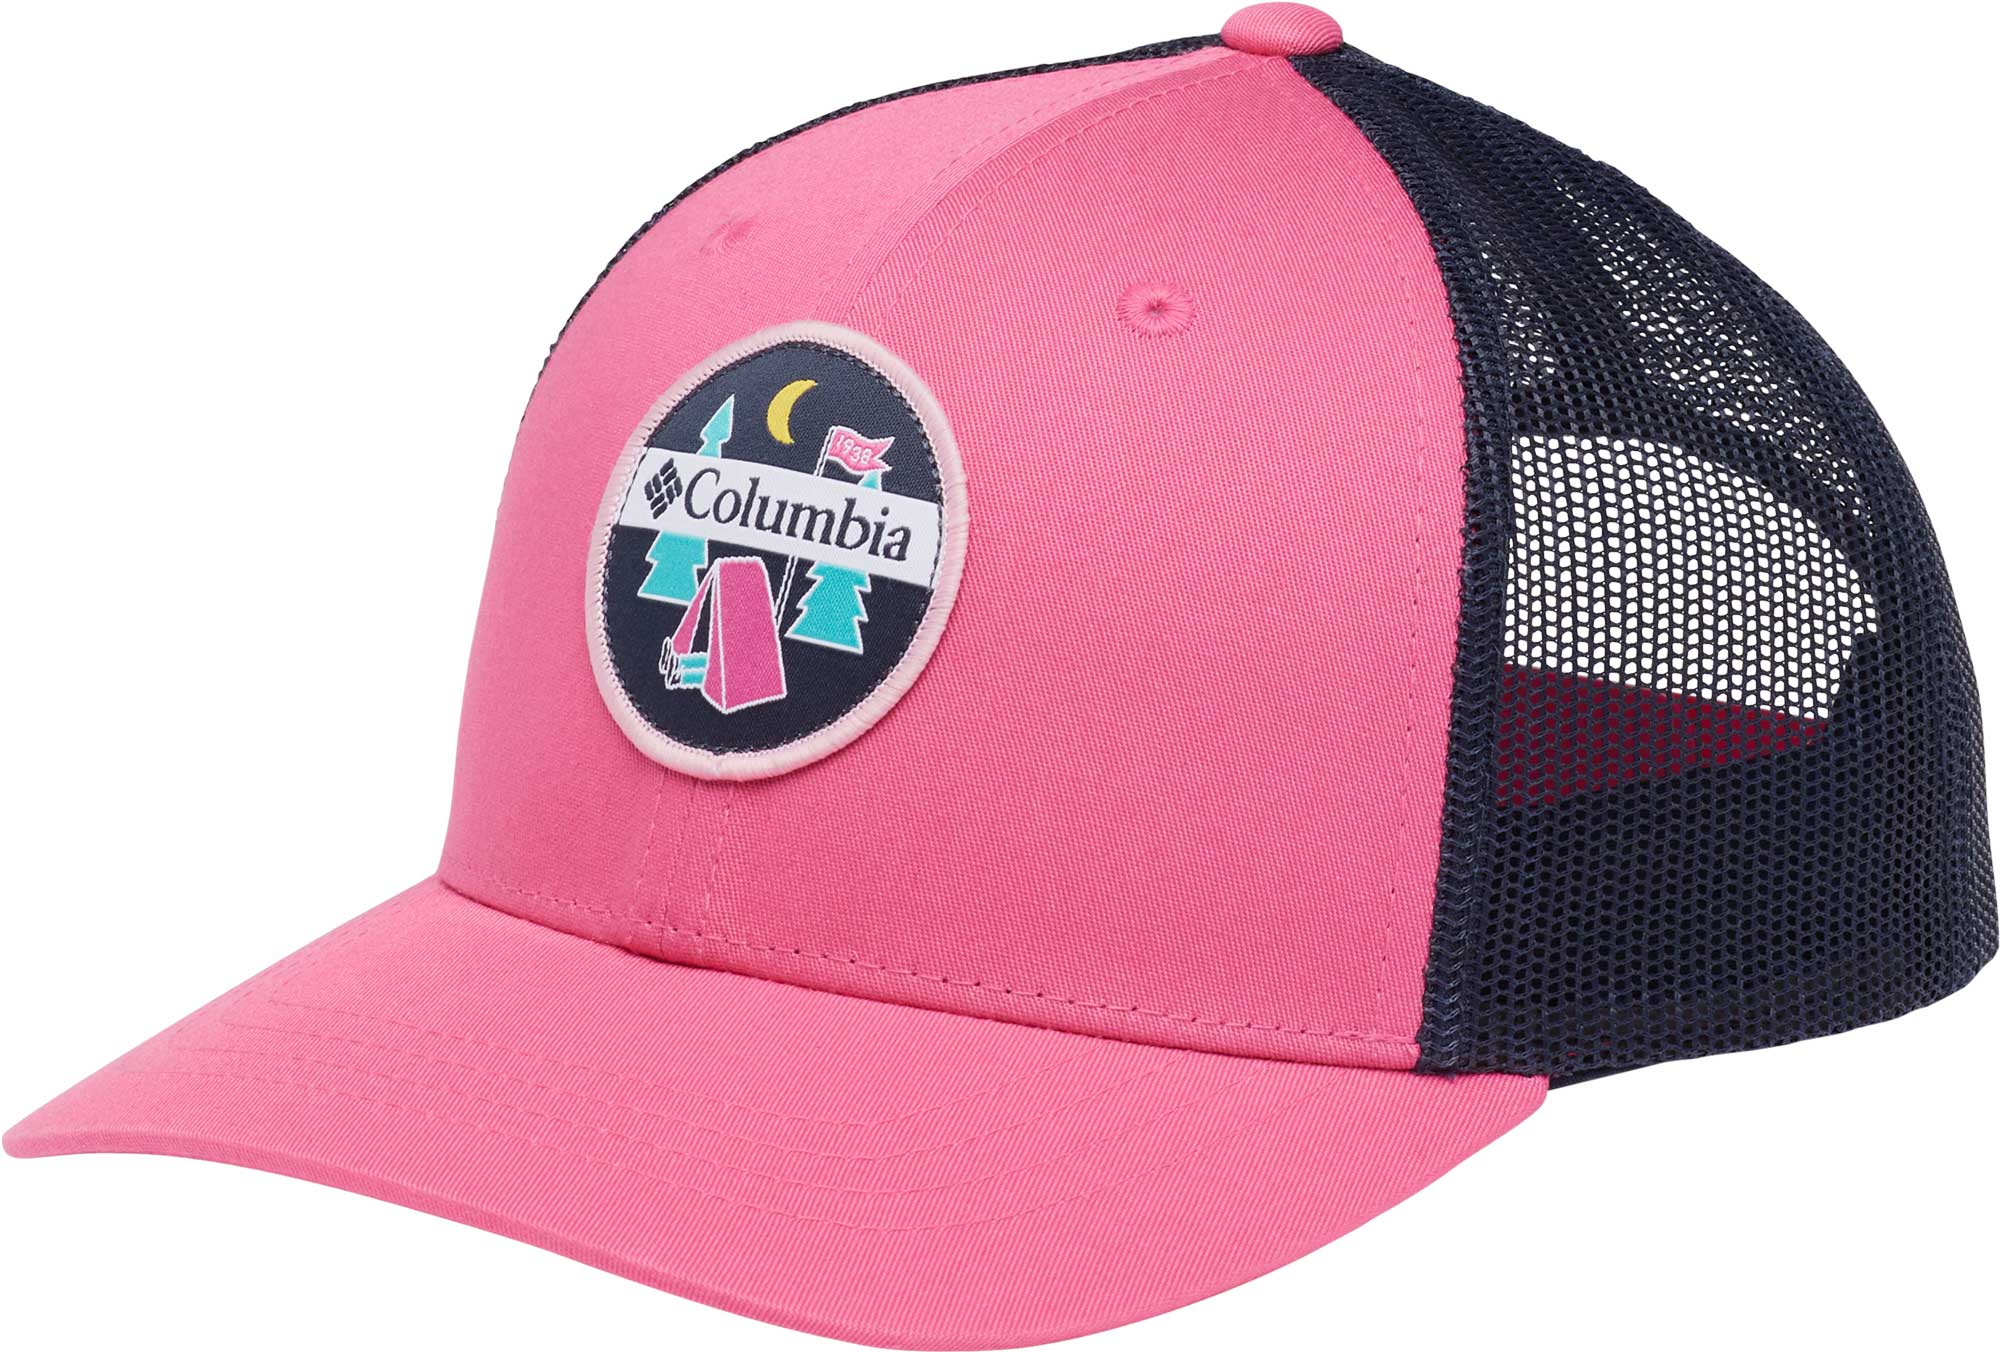 Children's stylish cap